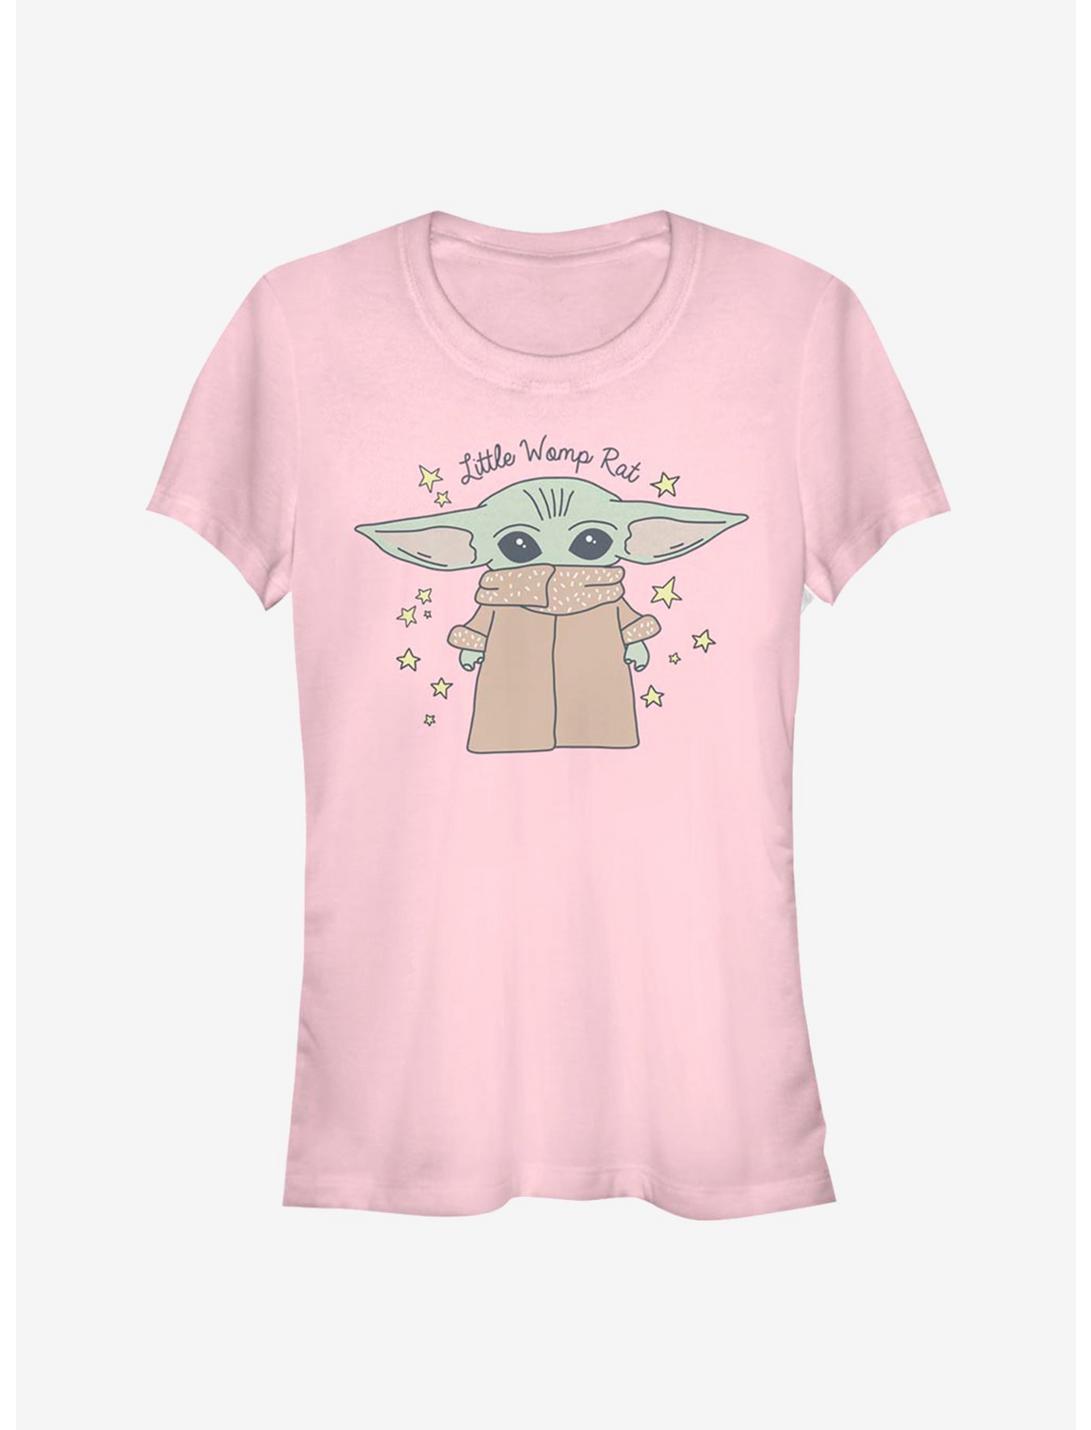 Star Wars The Mandalorian The Child Womp Rat Girls T-Shirt, LIGHT PINK, hi-res